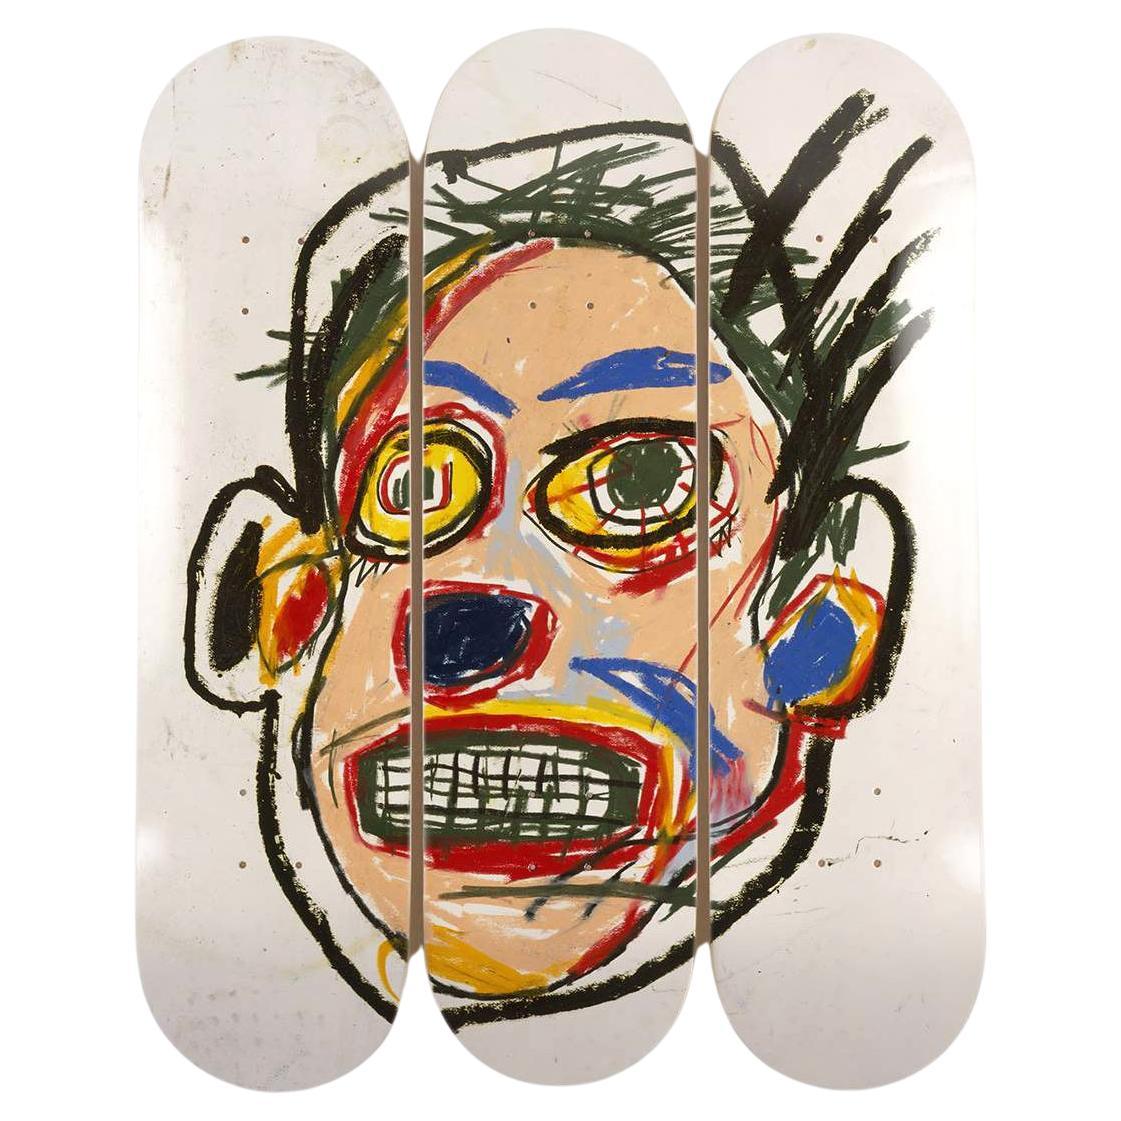 Untitled 'Face' Skateboard Decks after Jean-Michel Basquiat